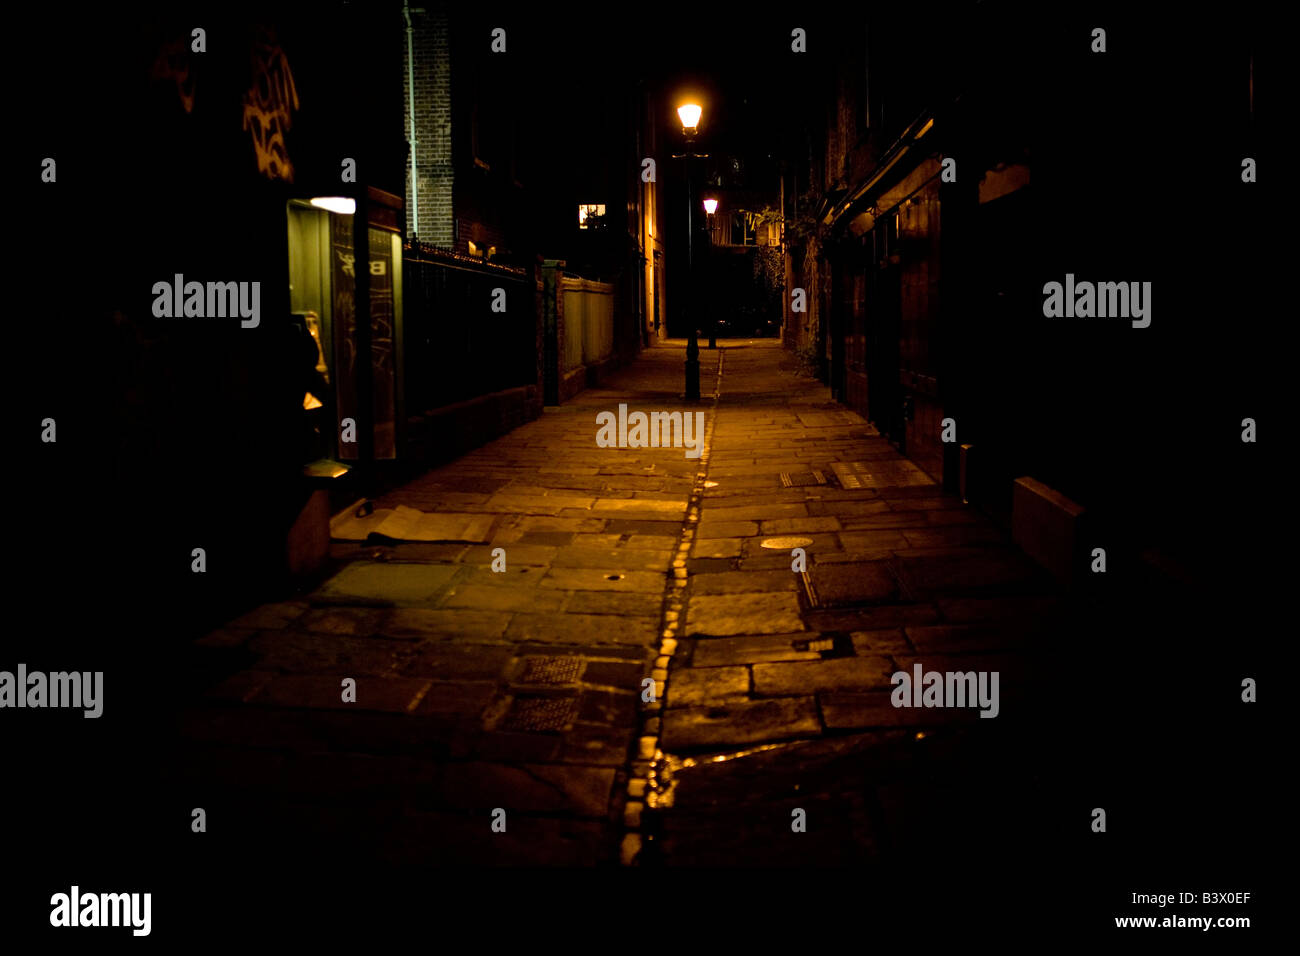 A dark alleyway. Stock Photo